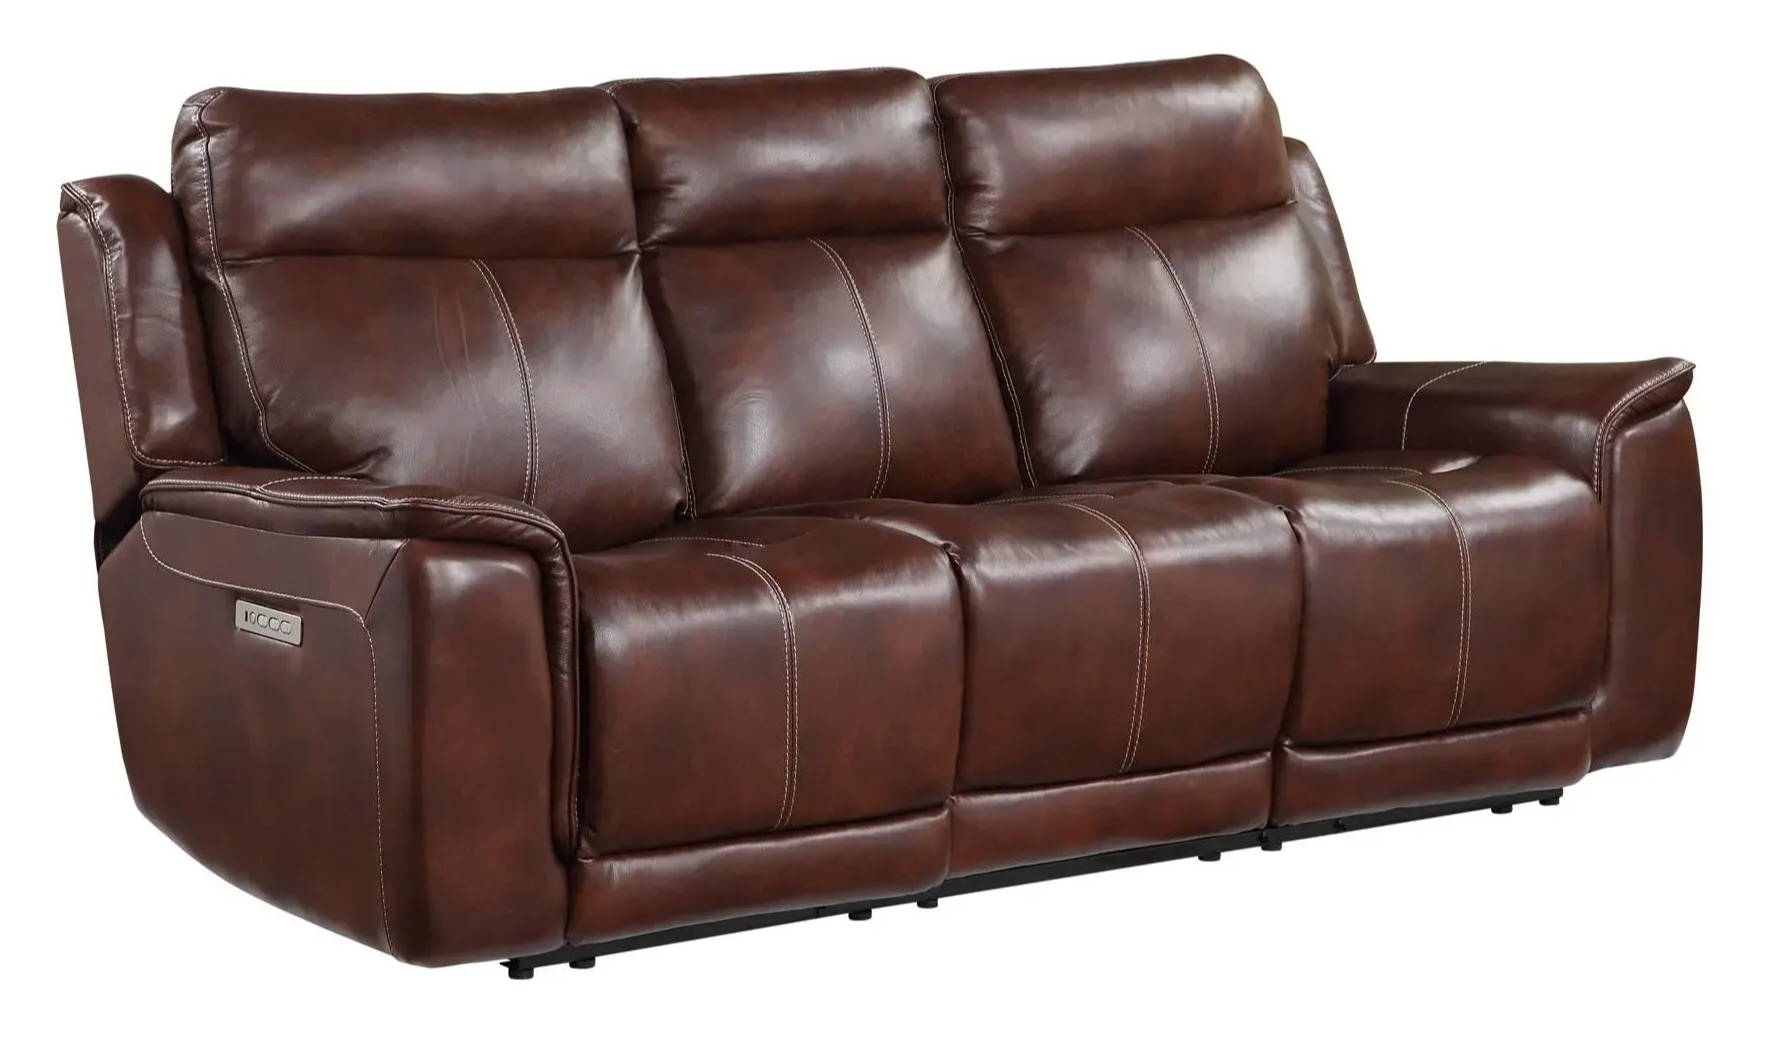 The Douglas Triple Power Sofa Product Review